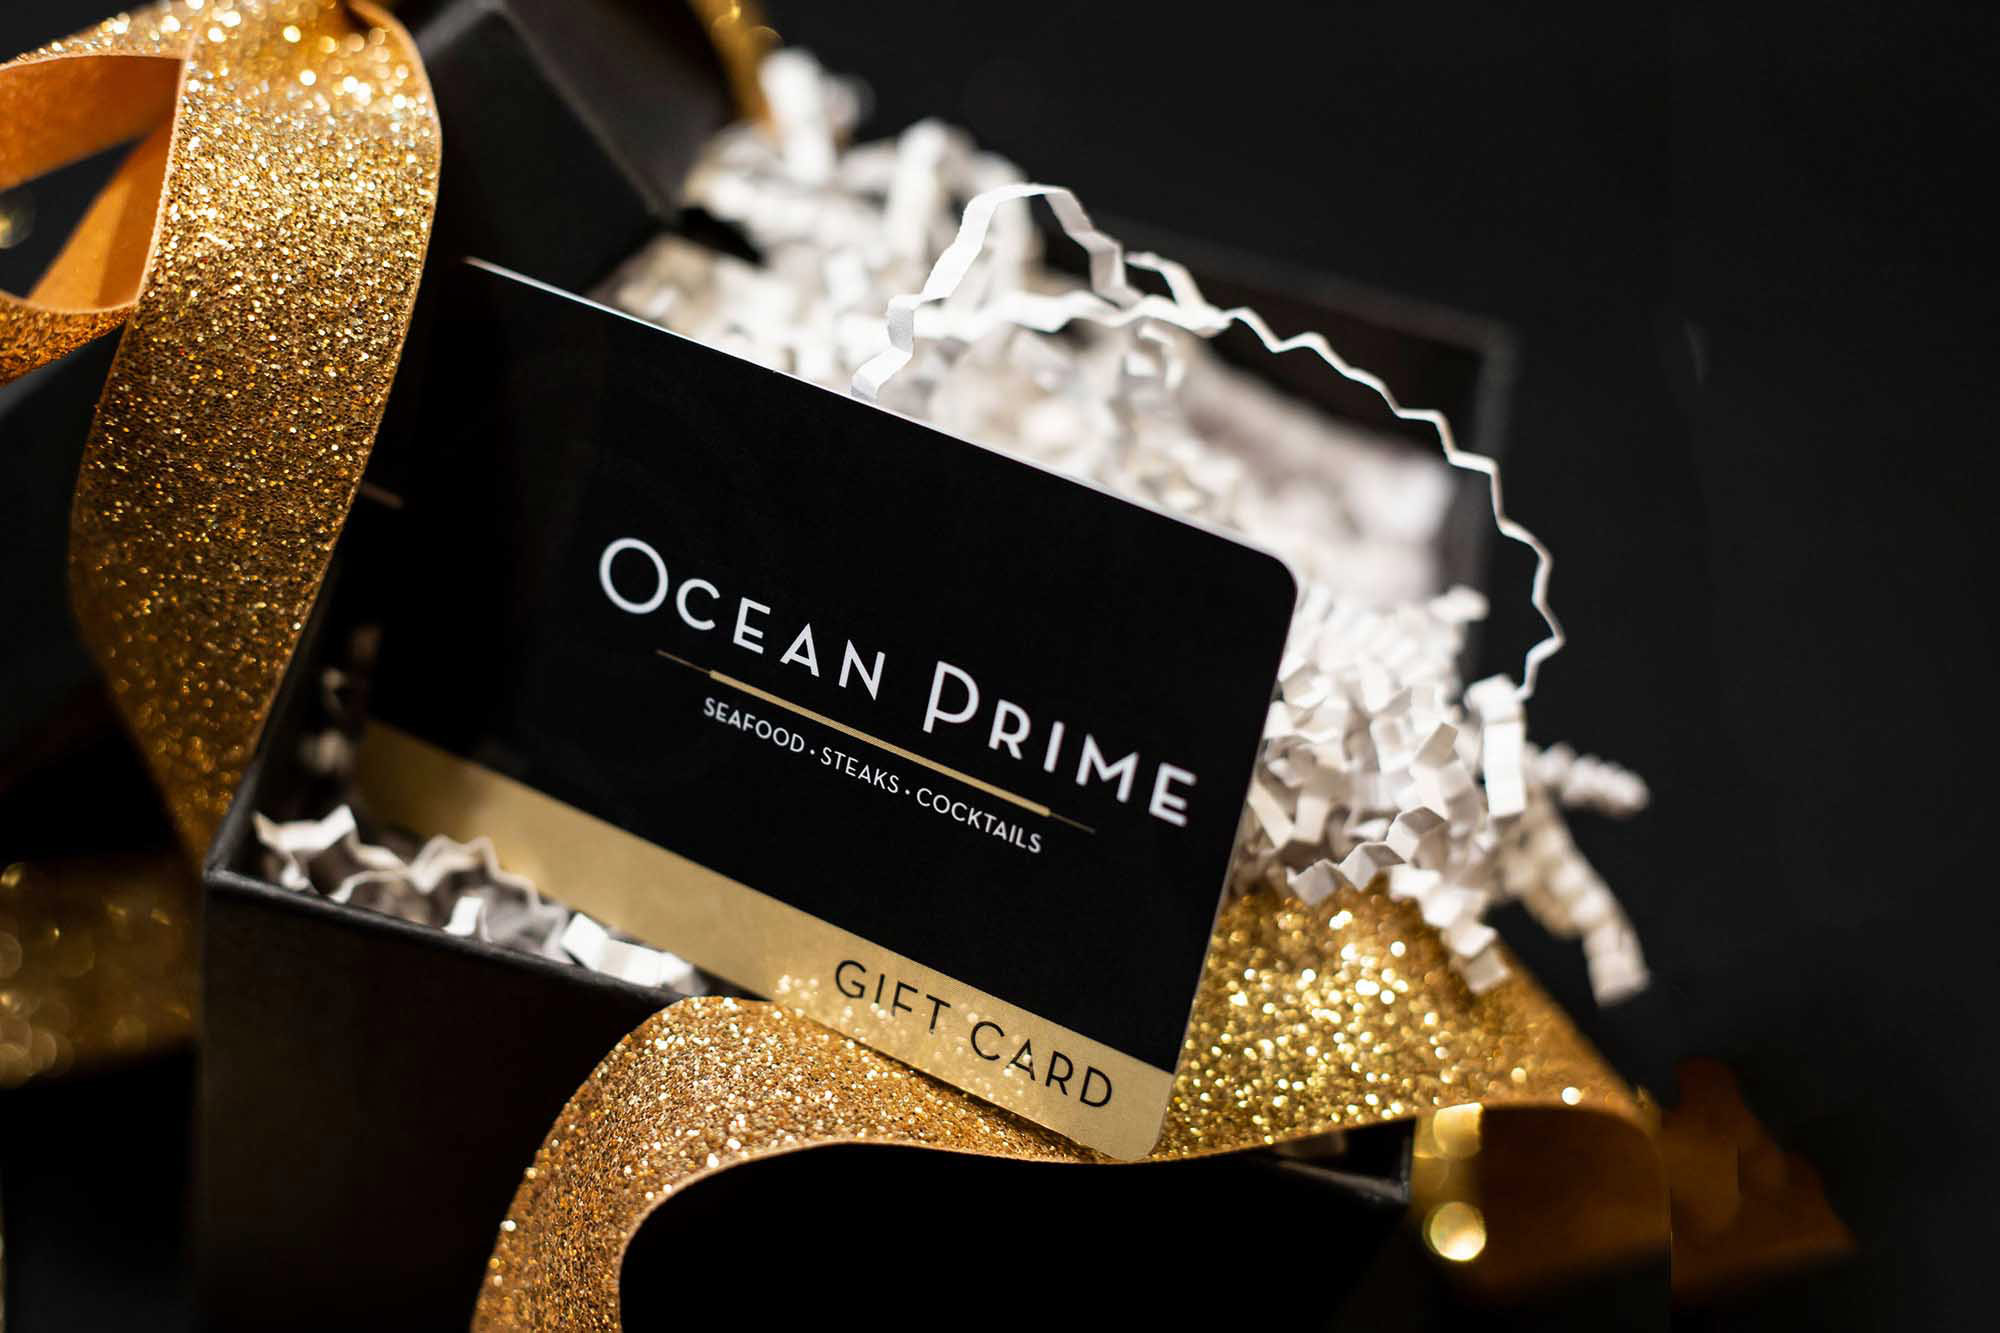 ocean prime gift card